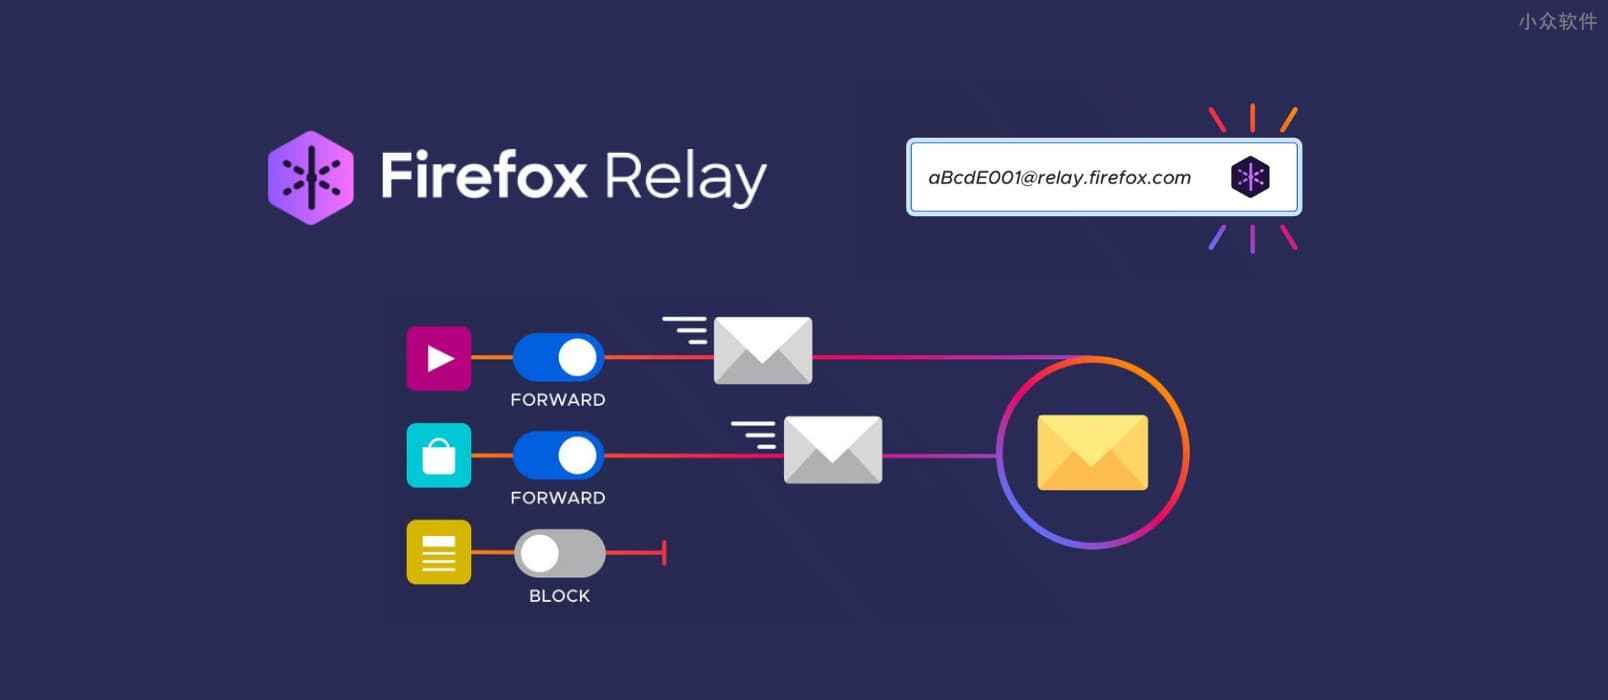 Firefox Relay – 免费提供 5 个临时邮箱地址，用来转发邮件，扩展算半成品？